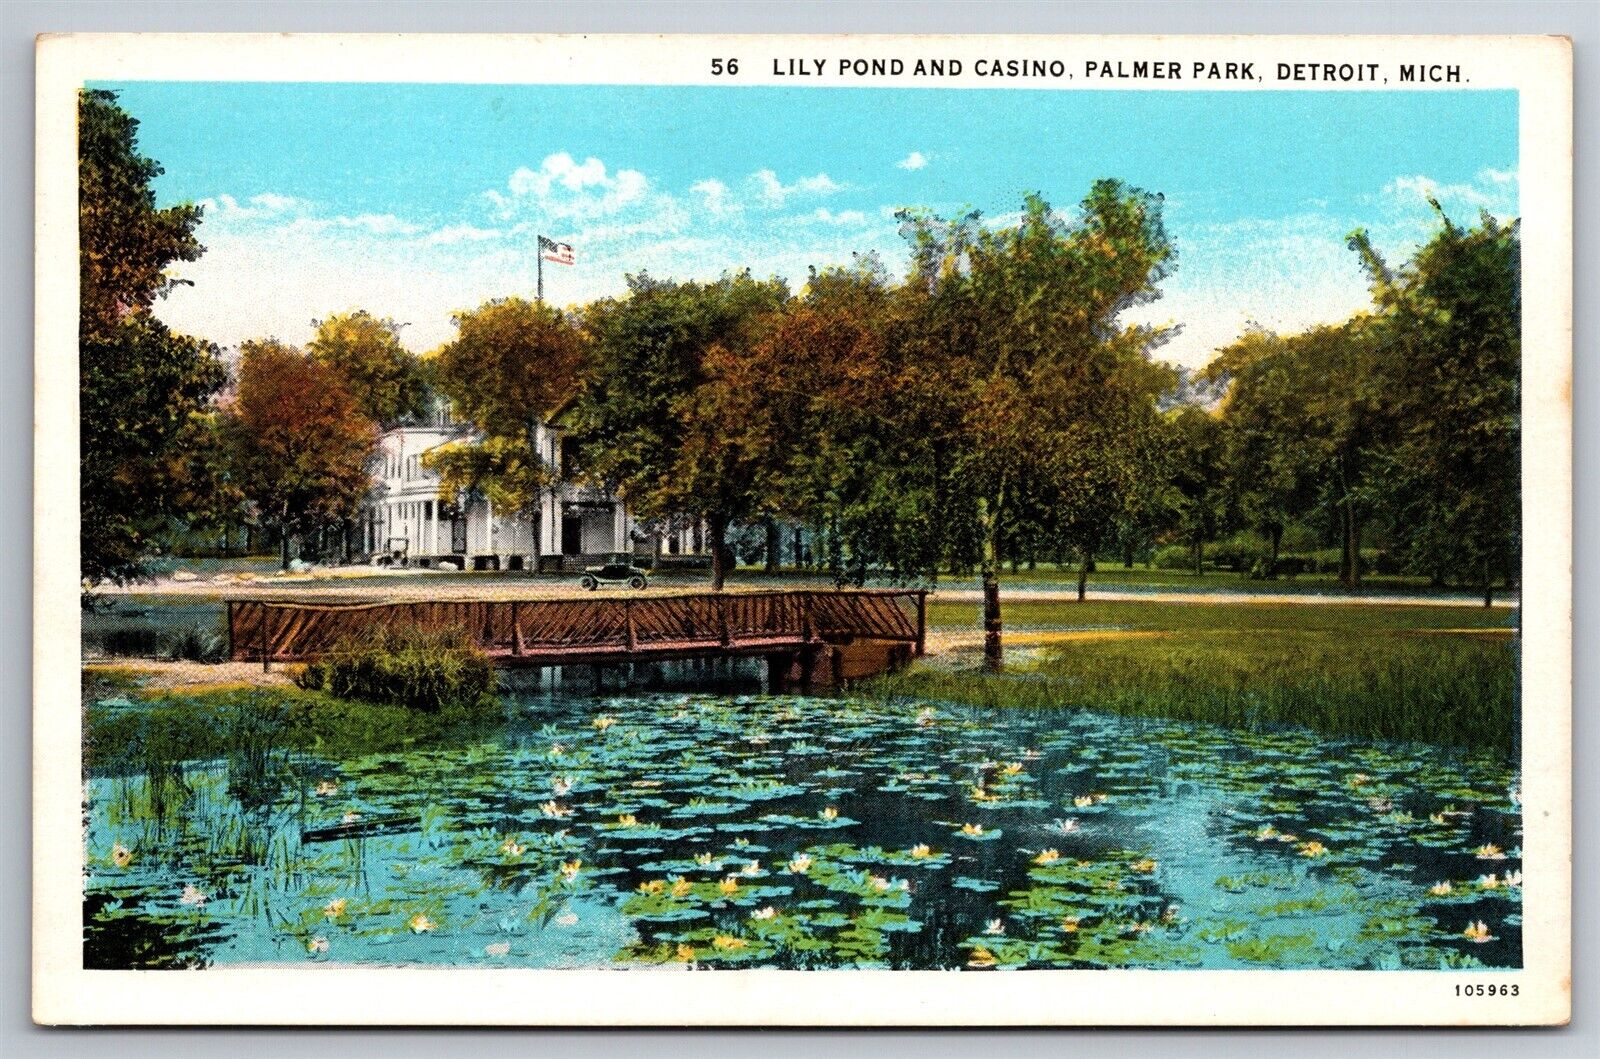 Casino & Lily Pond Palmer Park Wooden Bridge Flag Detroit MI C1930 Postcard H6